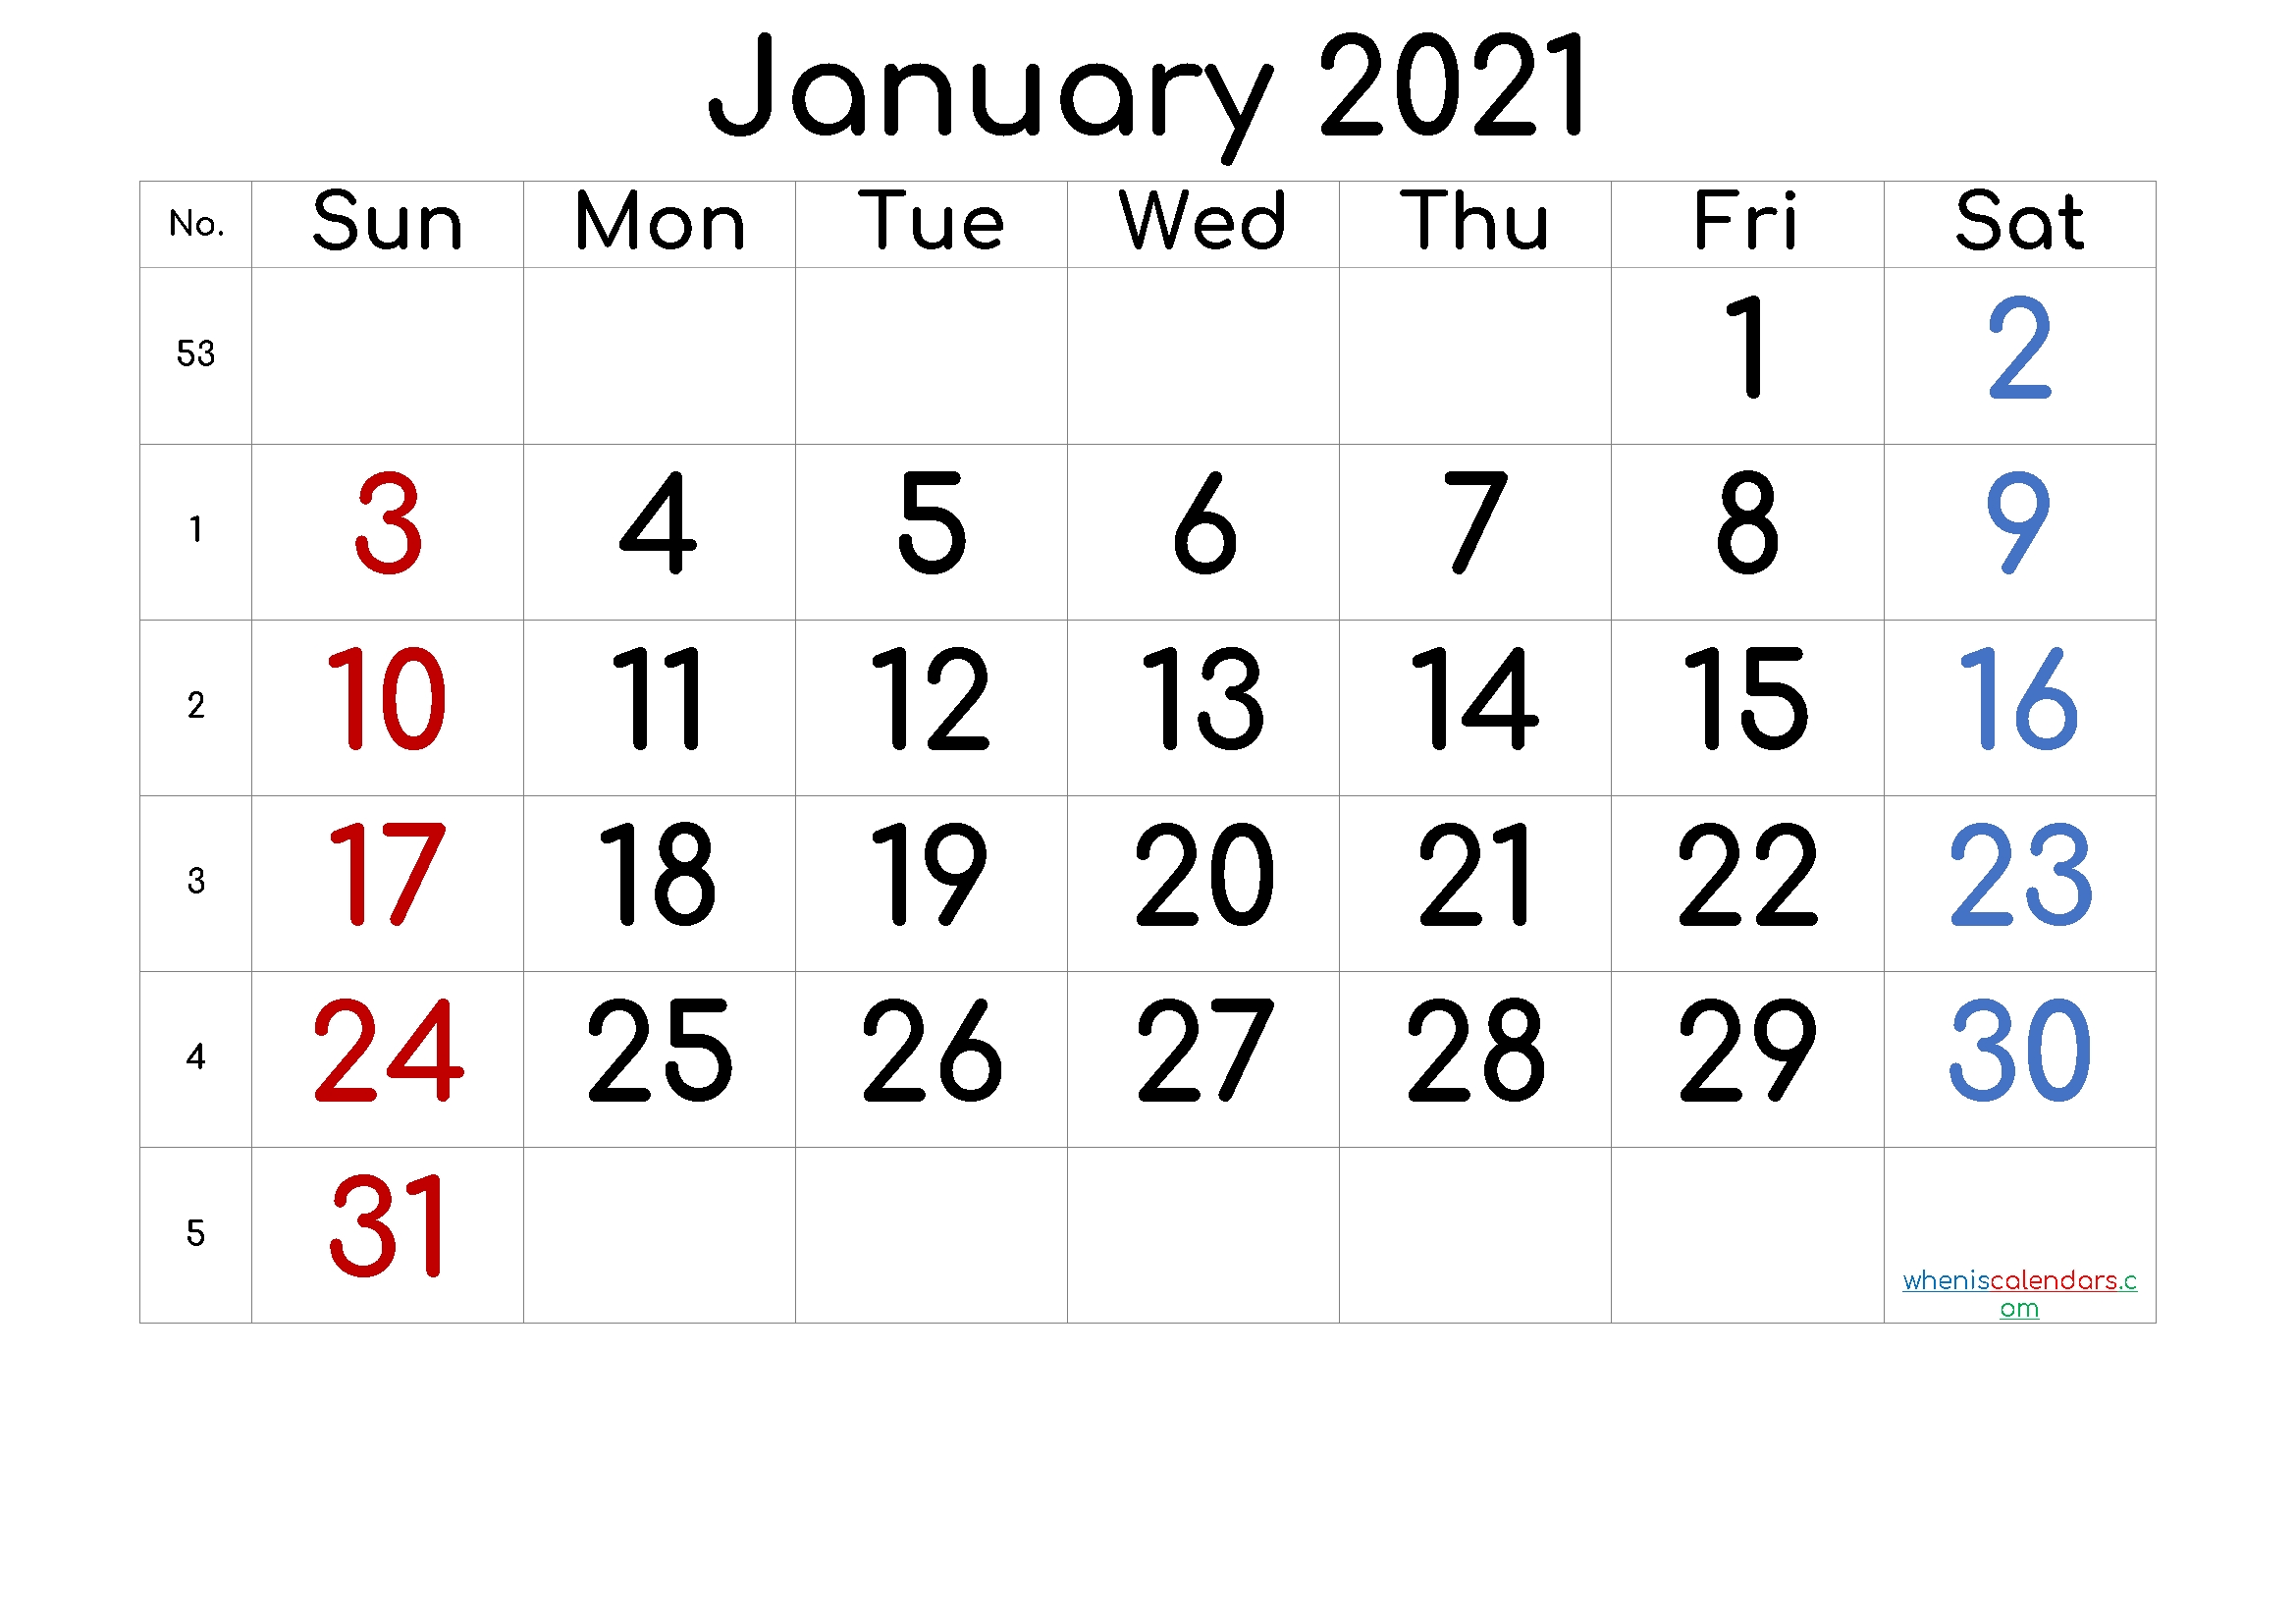 Download Calendar January 2021 / November 2020 To January 2021 Calendar A4 Size Pinterest / Once November December 2020 January 2021 Calendar